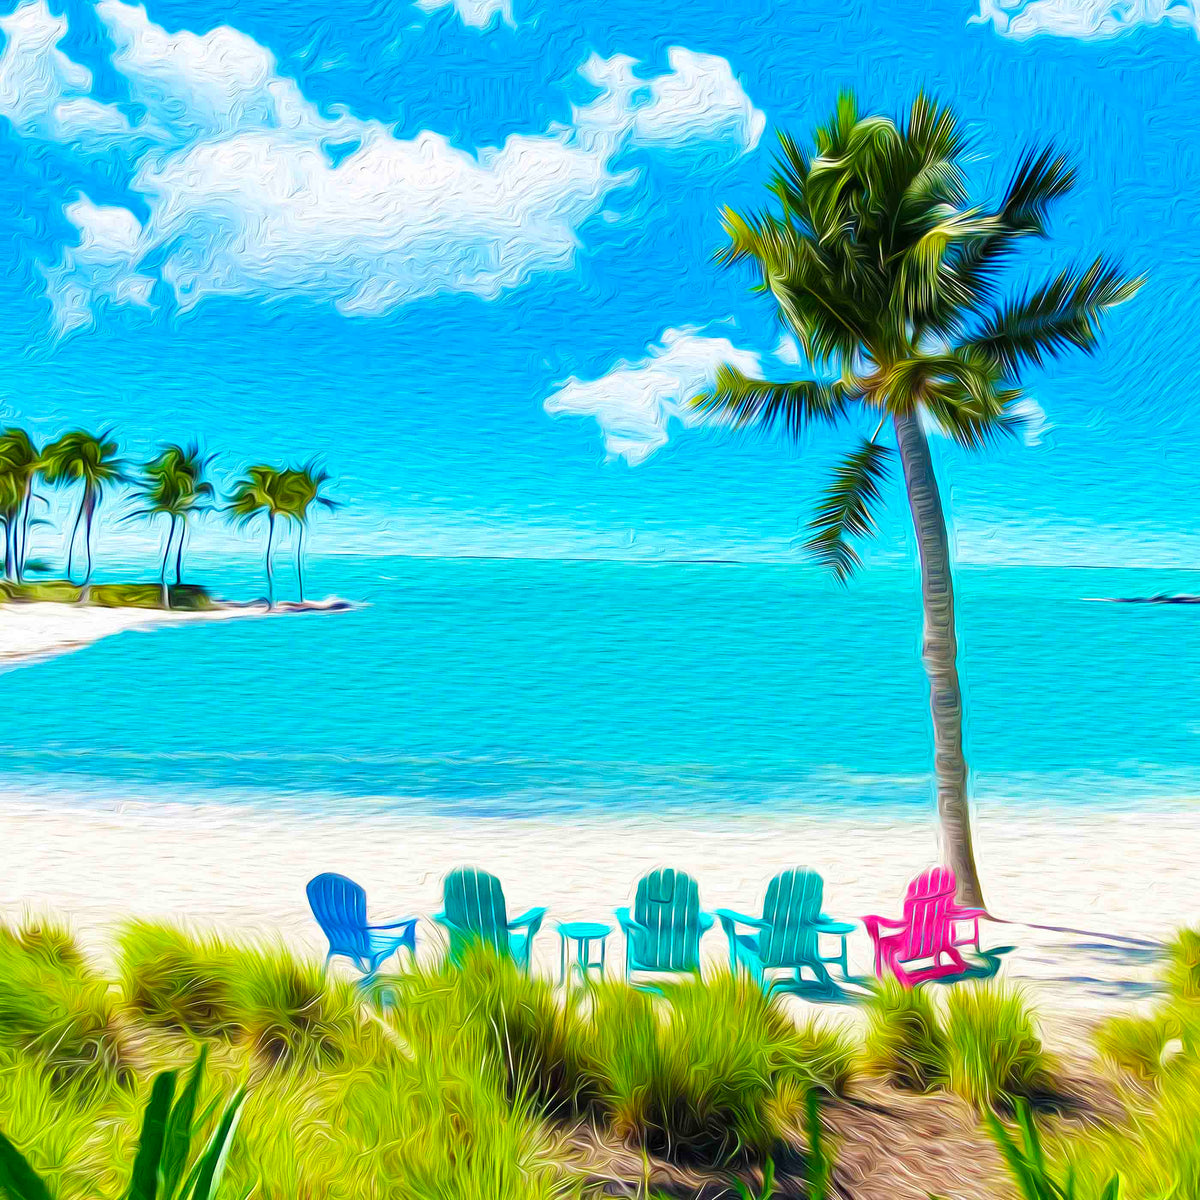 Island Life (Key West)